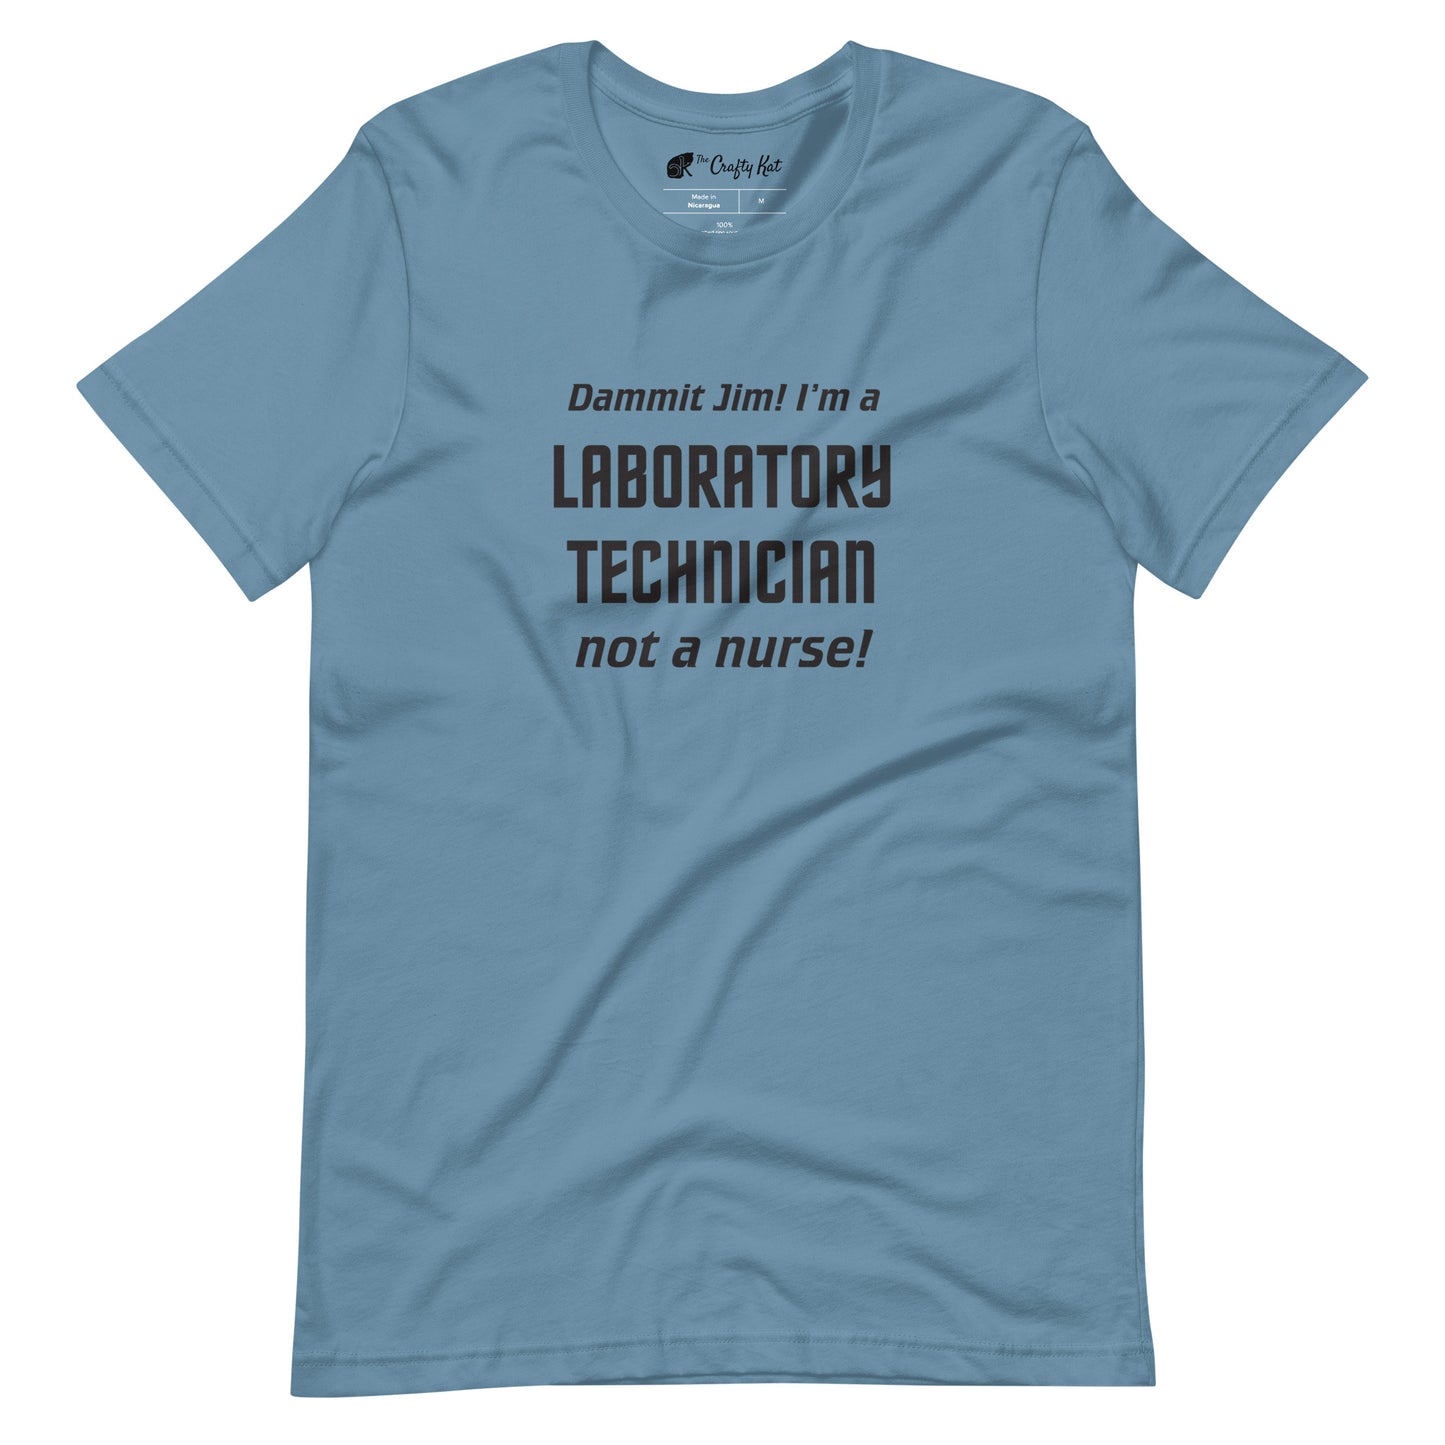 Steel Blue t-shirt with text graphic in Star Trek font: "Dammit Jim! I'm a LABORATORY TECHNICIAN not a nurse!"